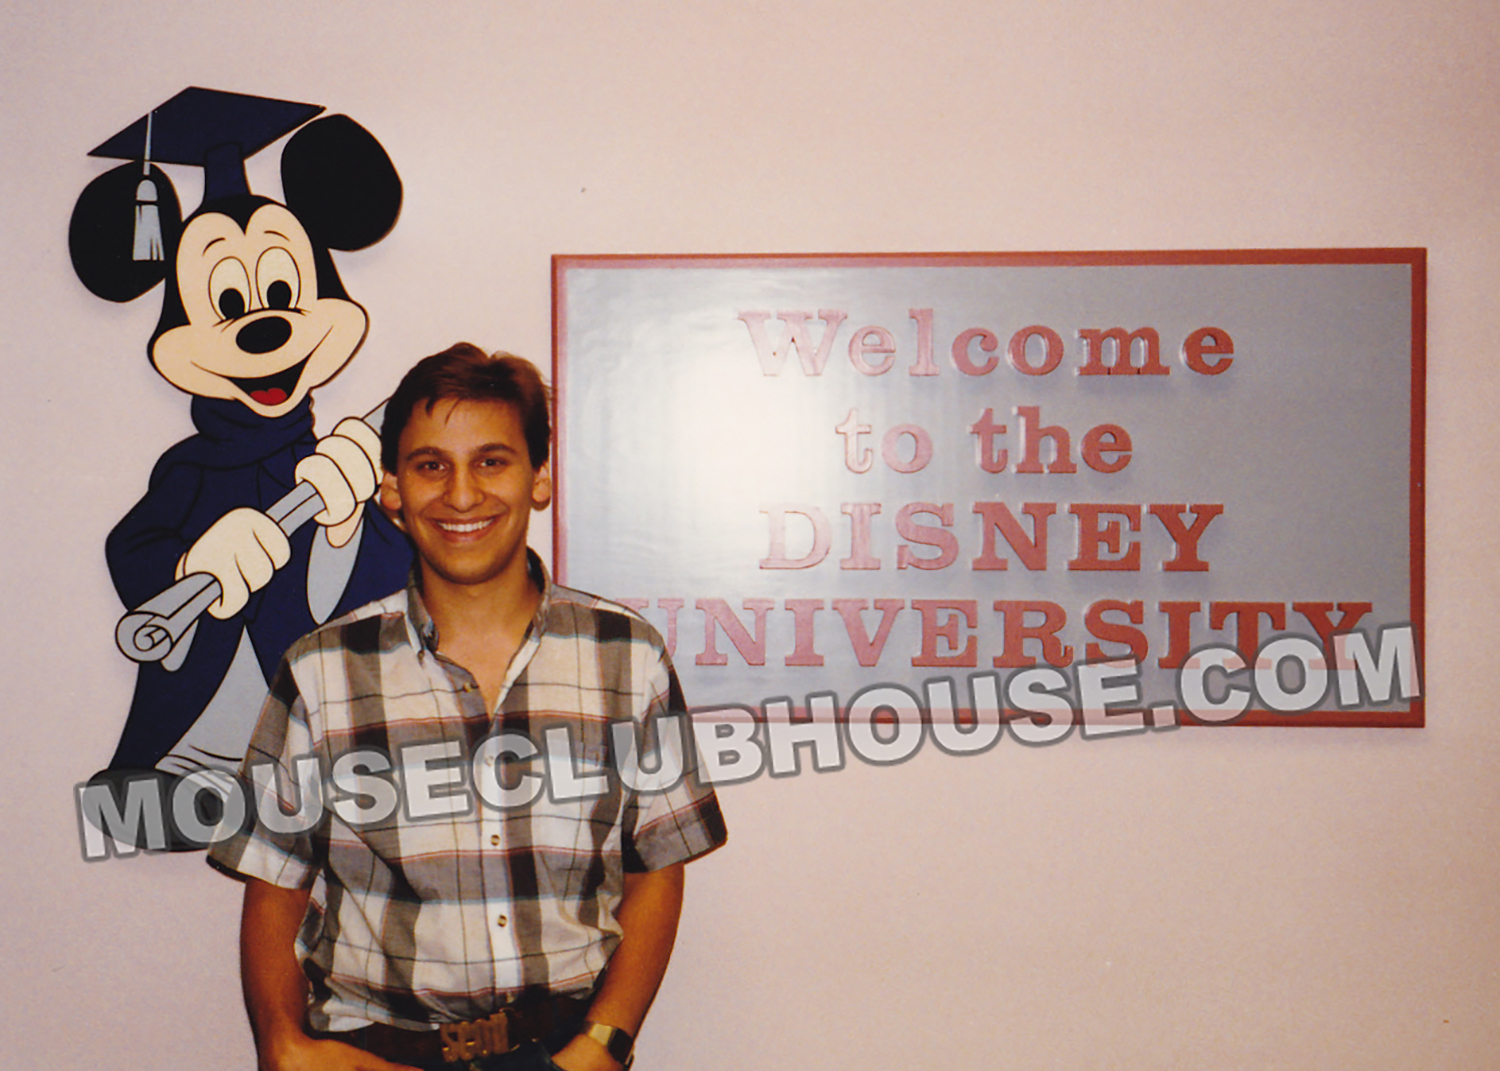 Scott at the Disney University at the Walt Disney Studios in Burbank, CA